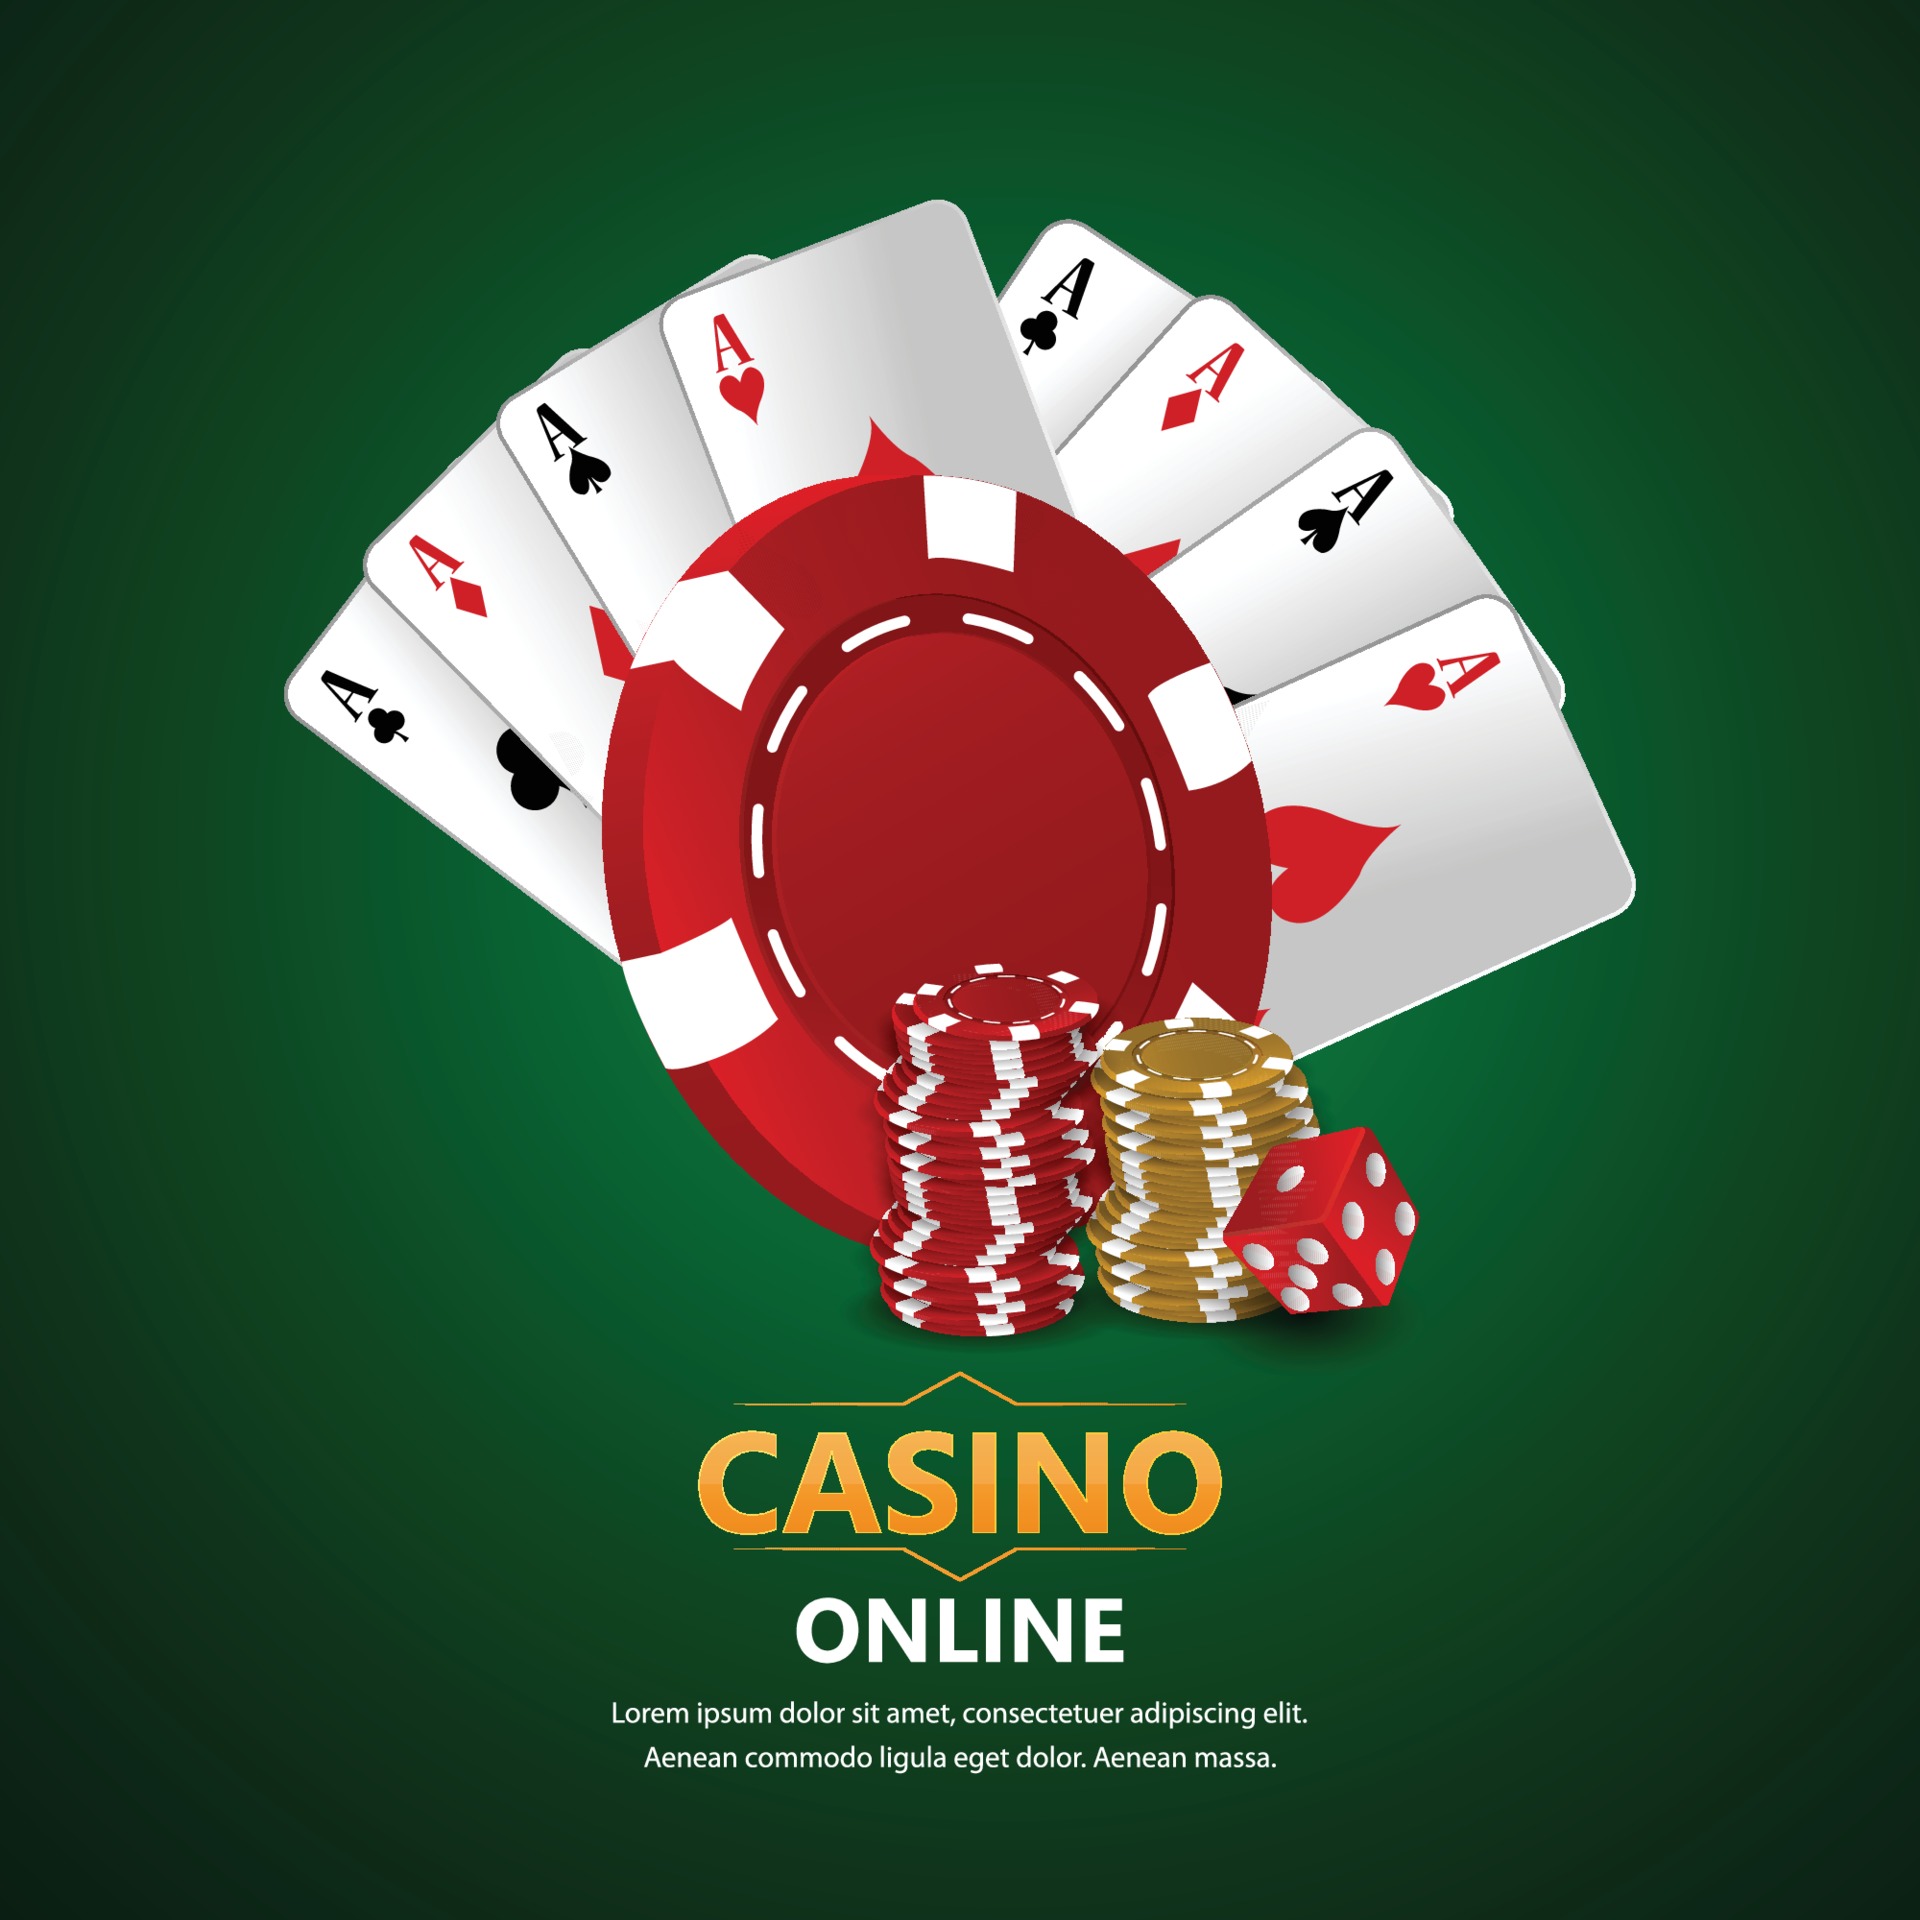 Play free poker slots online casino казино в приколы